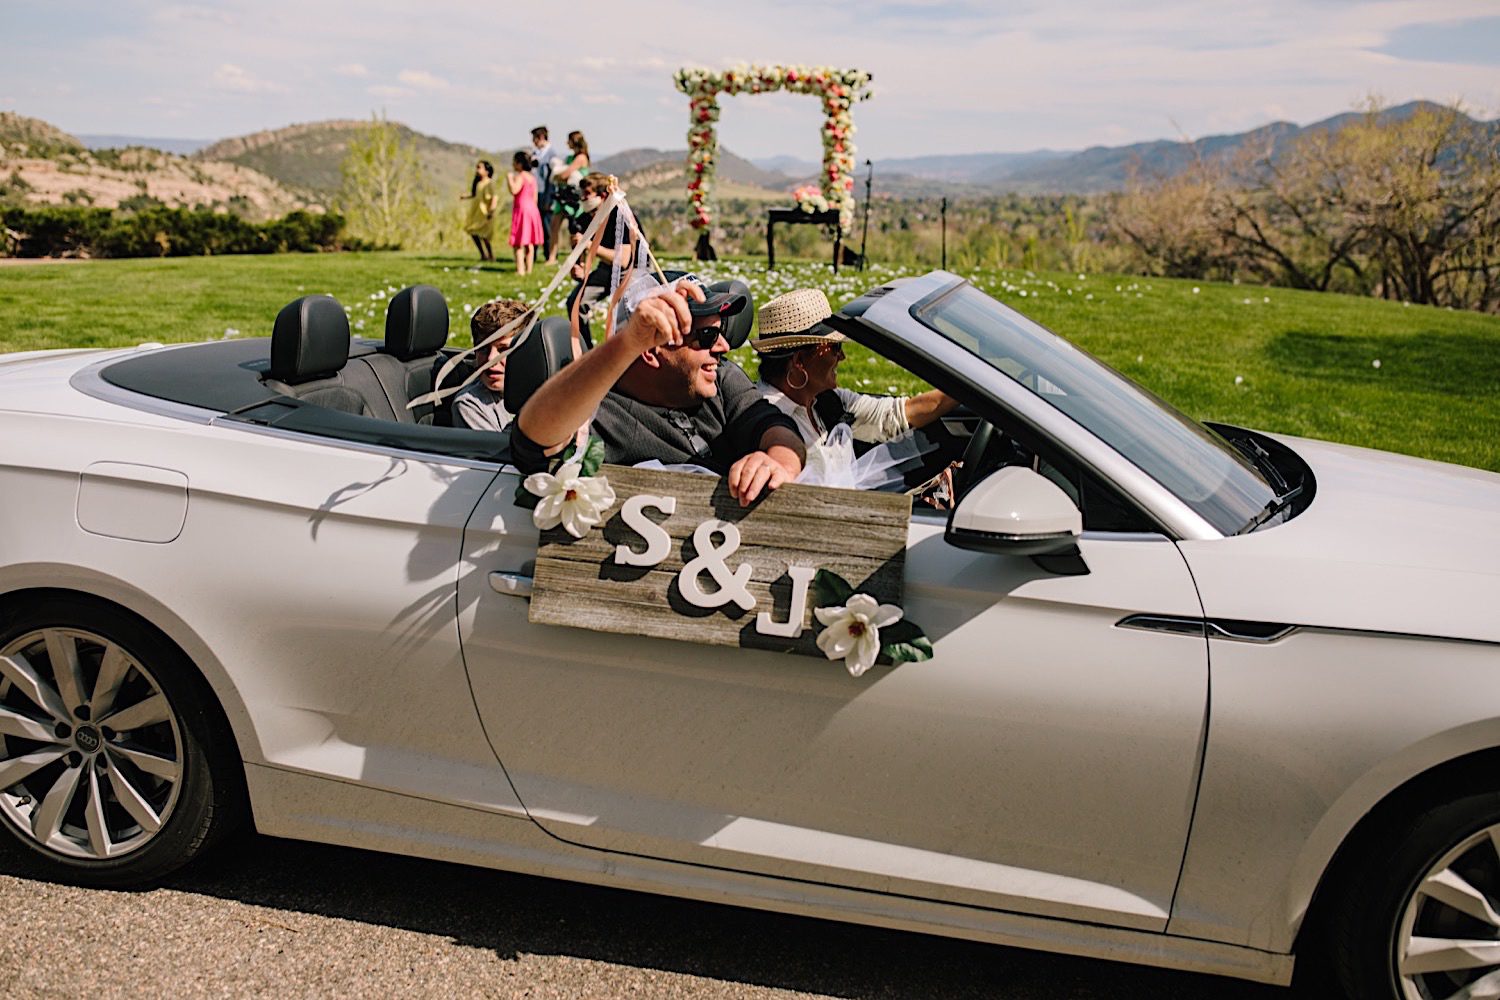 Car parade for COVID Wedding, COVID Wedding ideas, Pandemic Wedding ideas, The Manor House, Colorado Wedding photographer